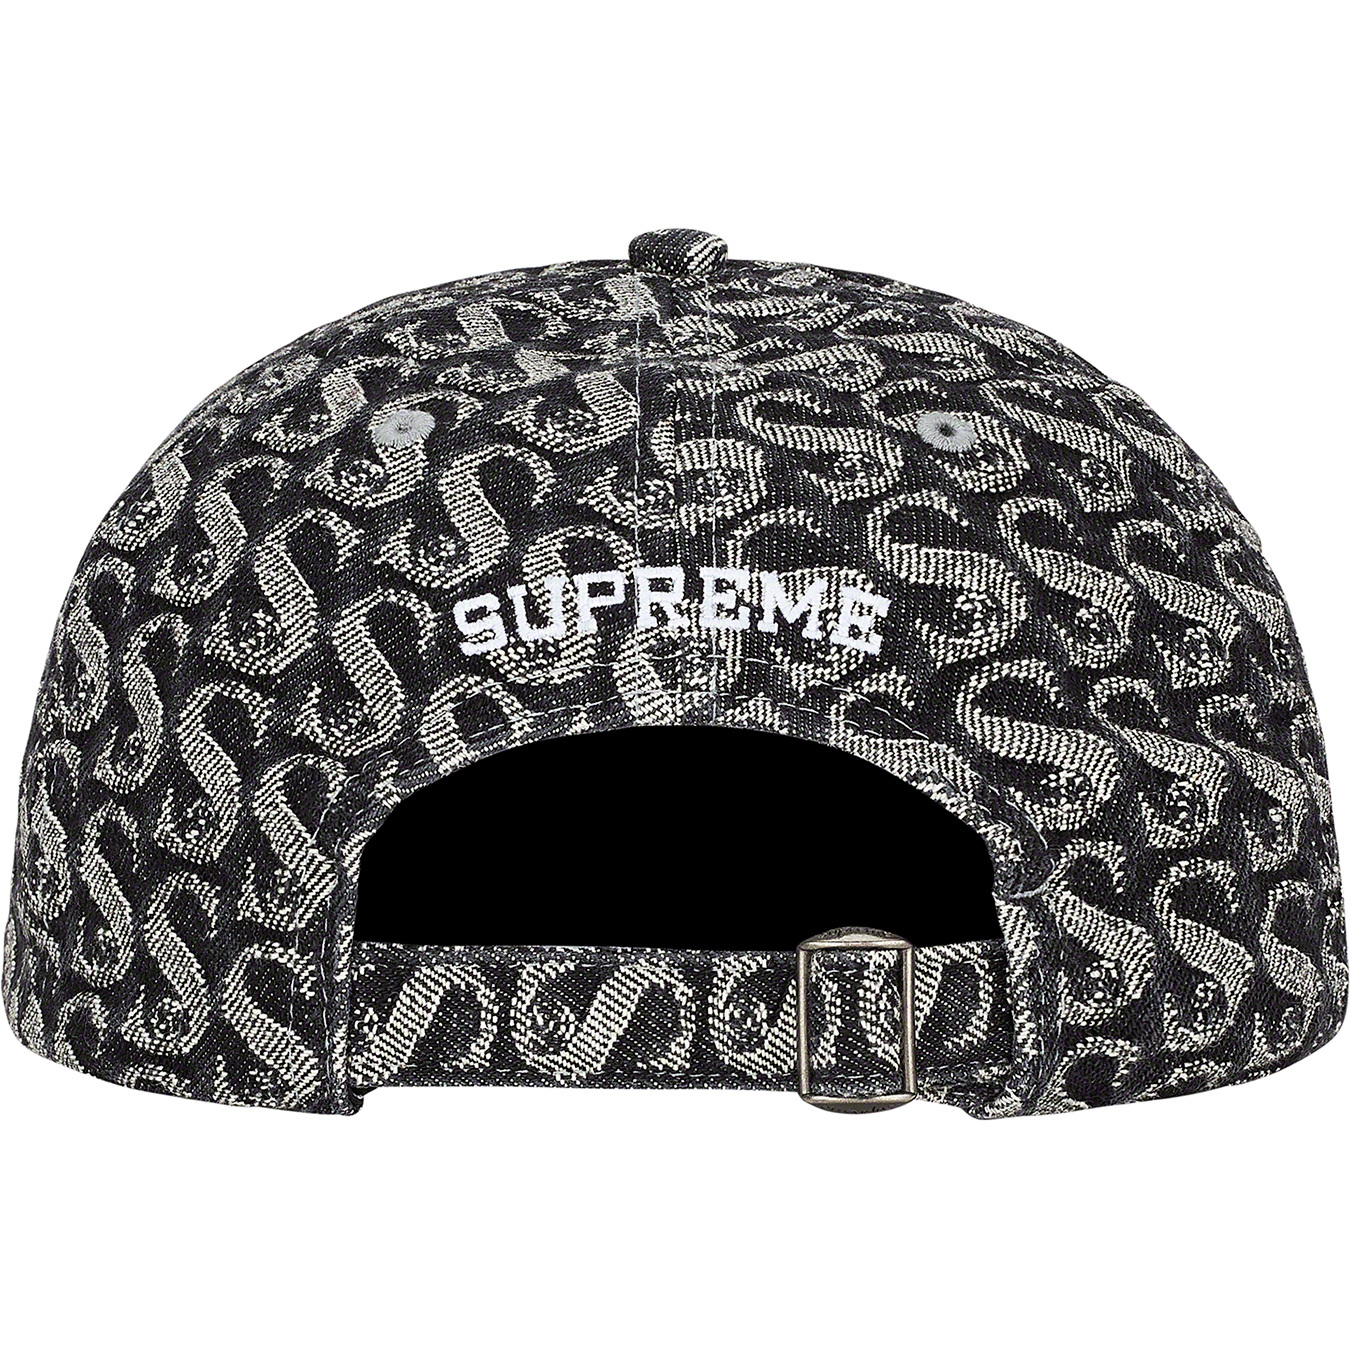 Supreme Monogram Denim Hat 'Black